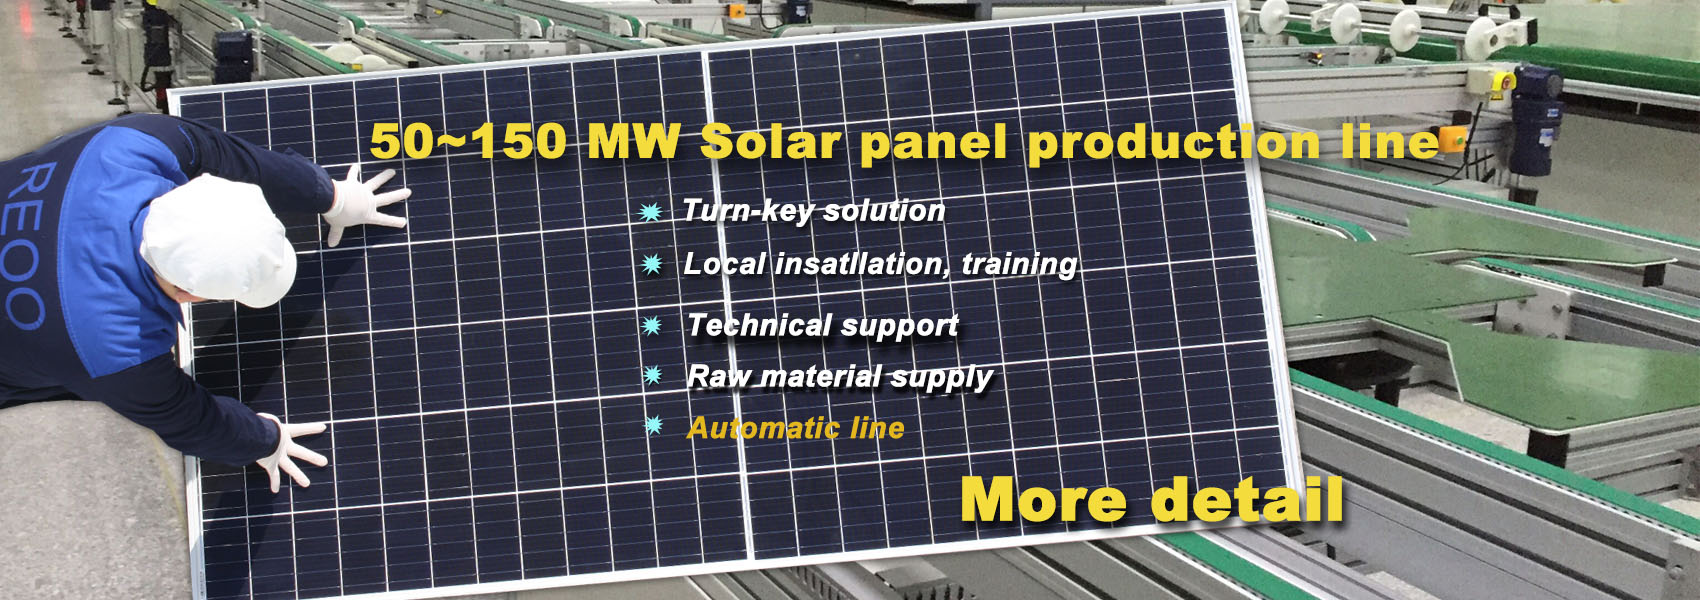 50MW solar panel production line